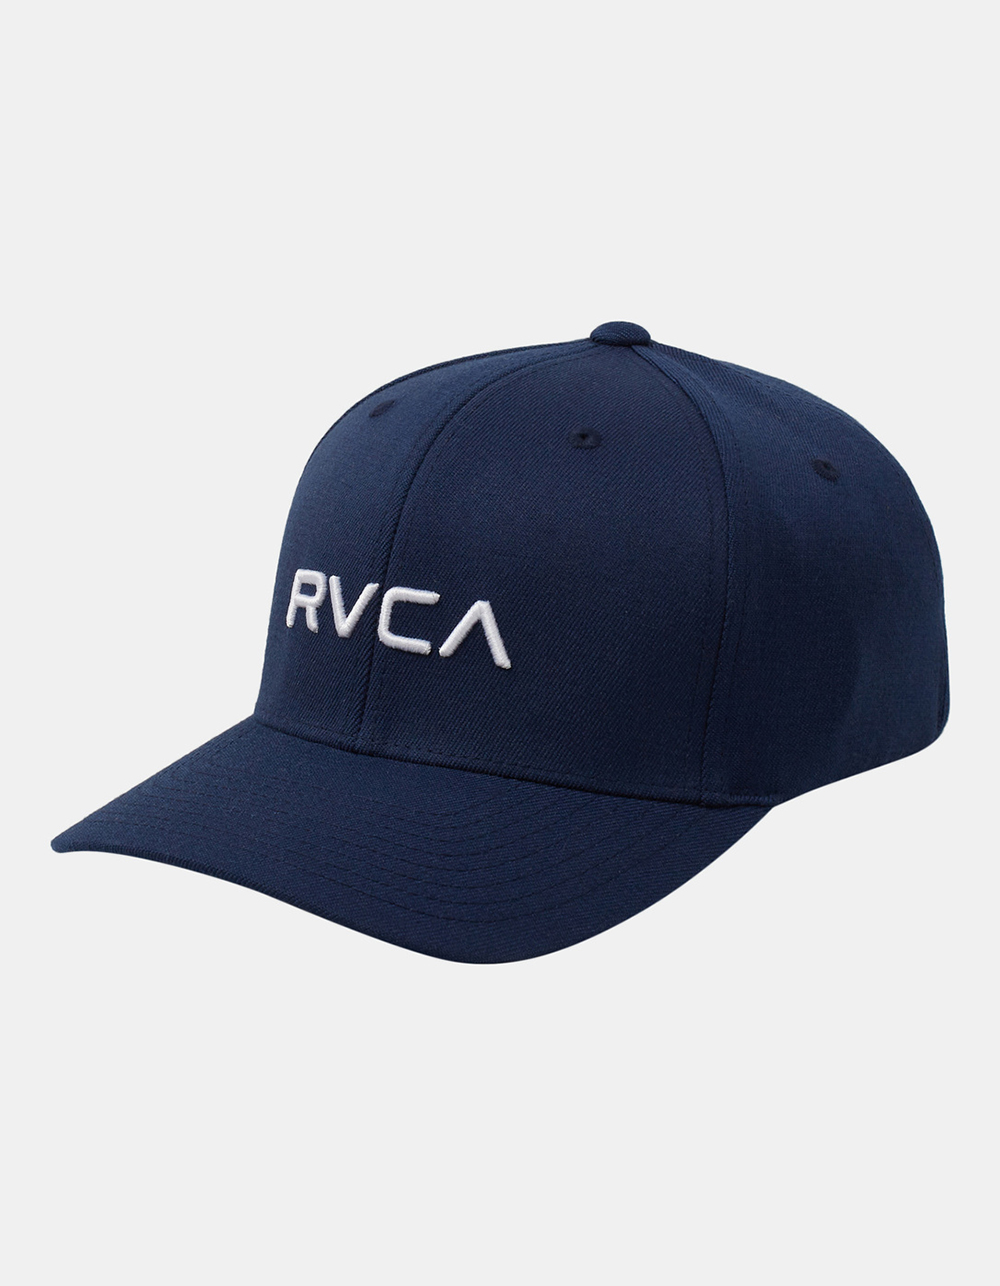 RVCA Mens Tillys NAVY Hat - Flexfit |